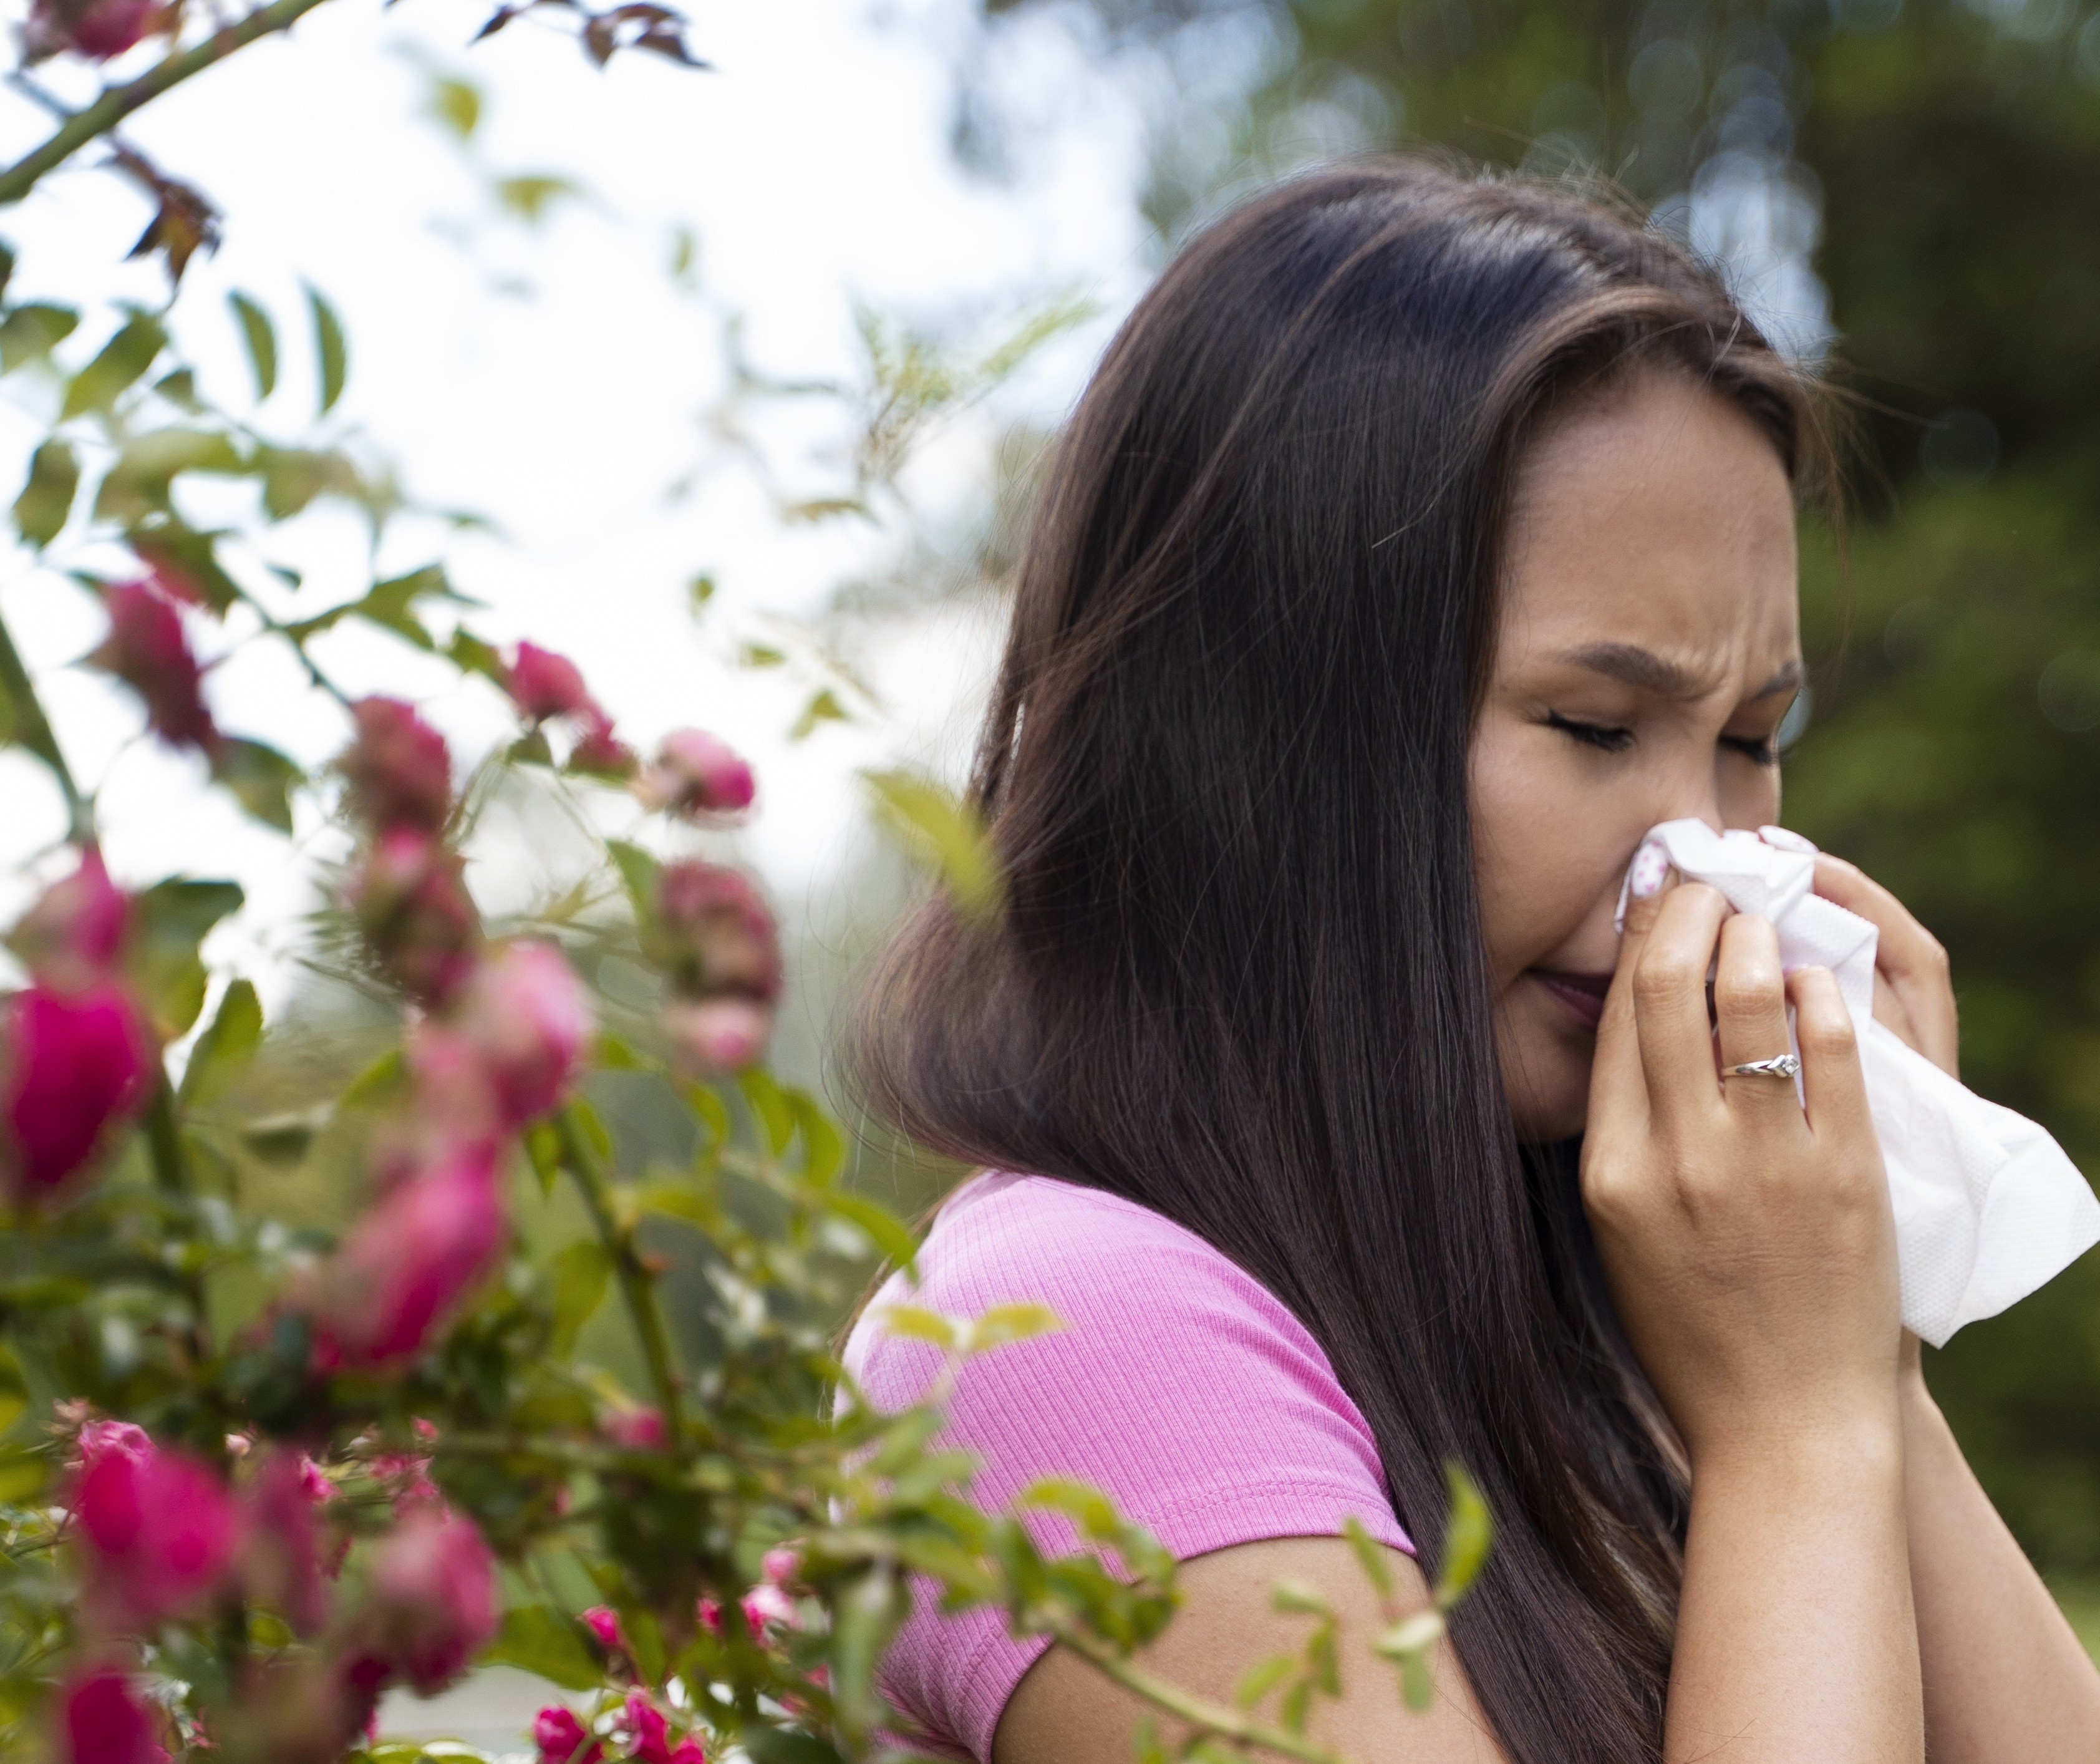 Especialista alerta sobre sintomas de alergias nesta época do ano